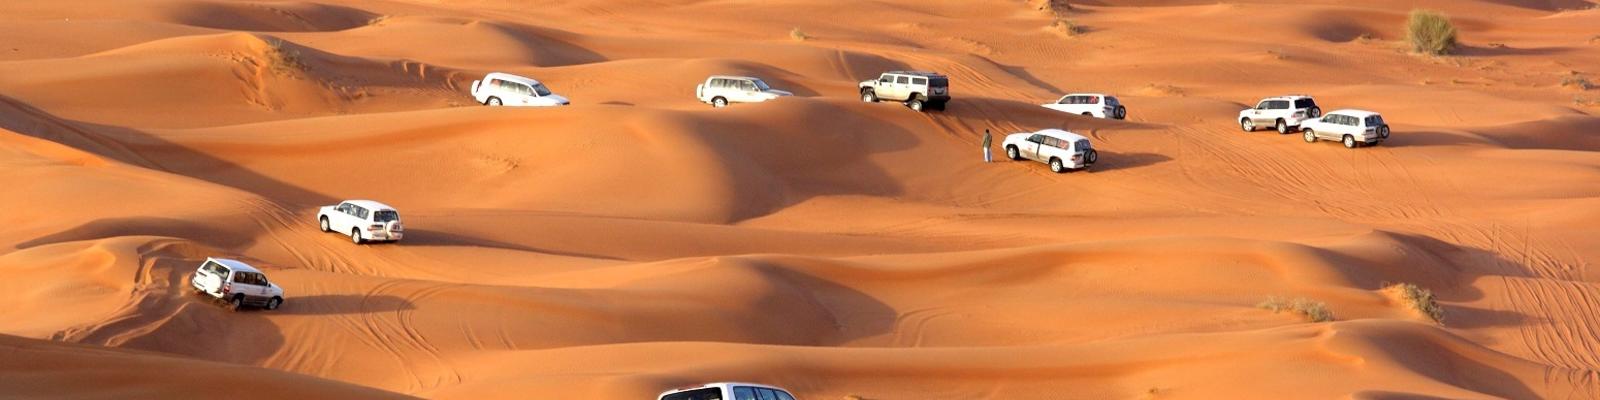 Desert dune bashing. Photo: Getty Images.